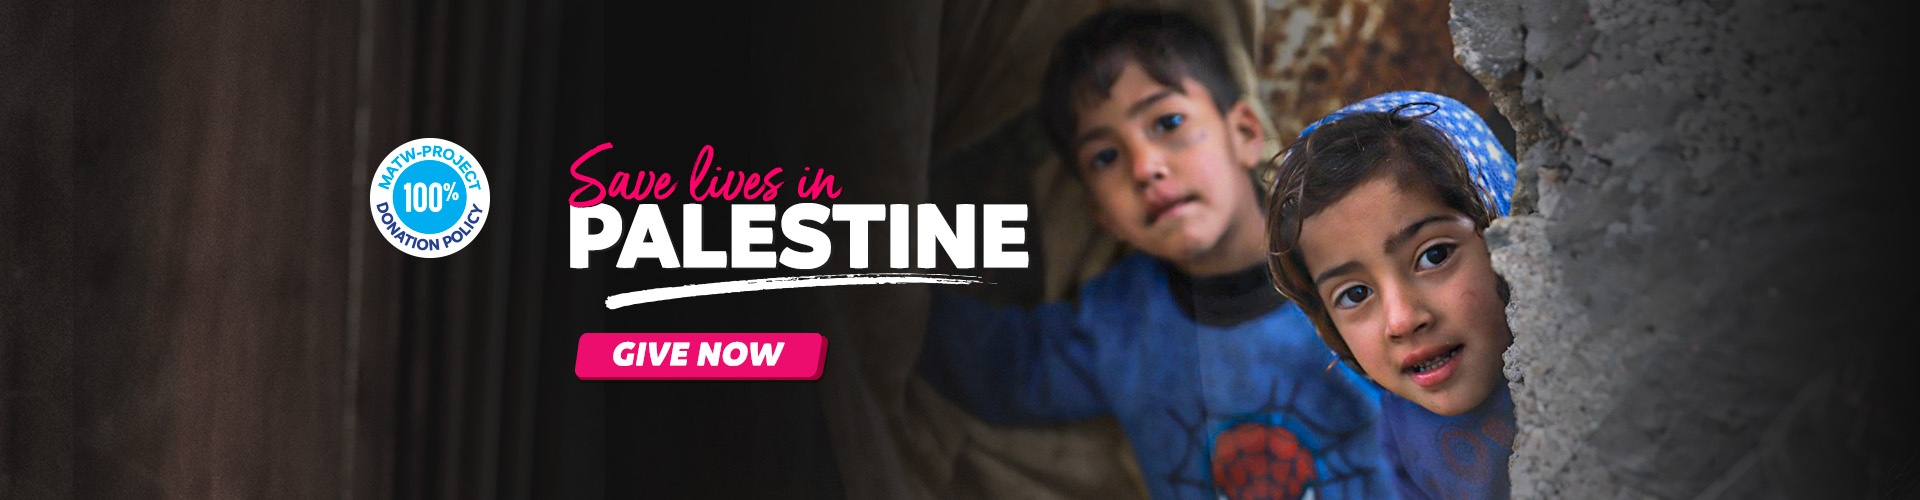 Donate to Palestine